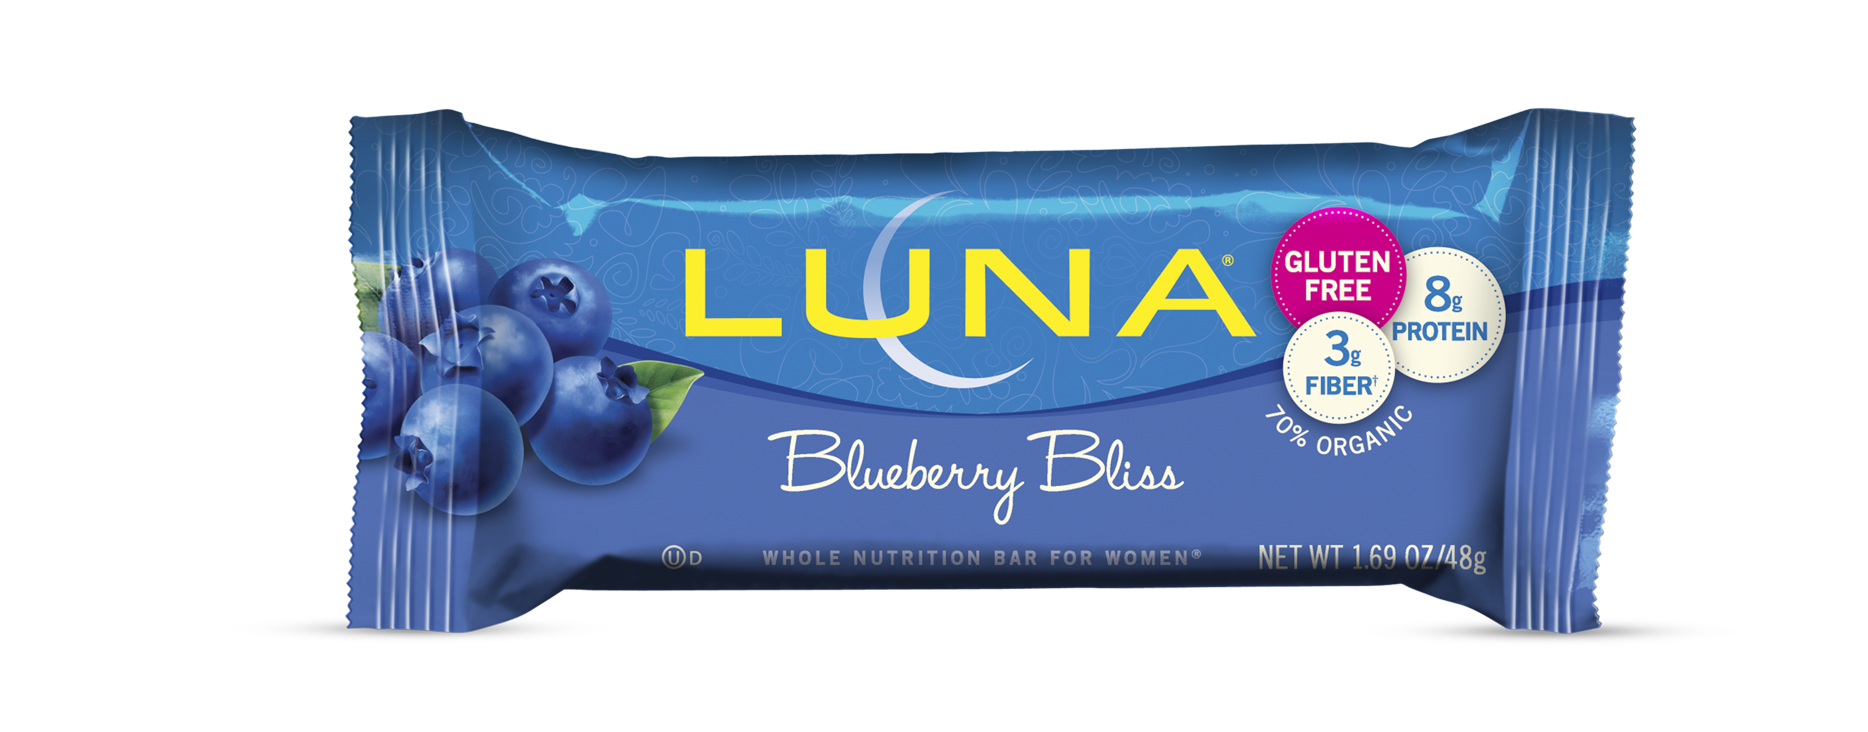 Luna Blueberry Bliss